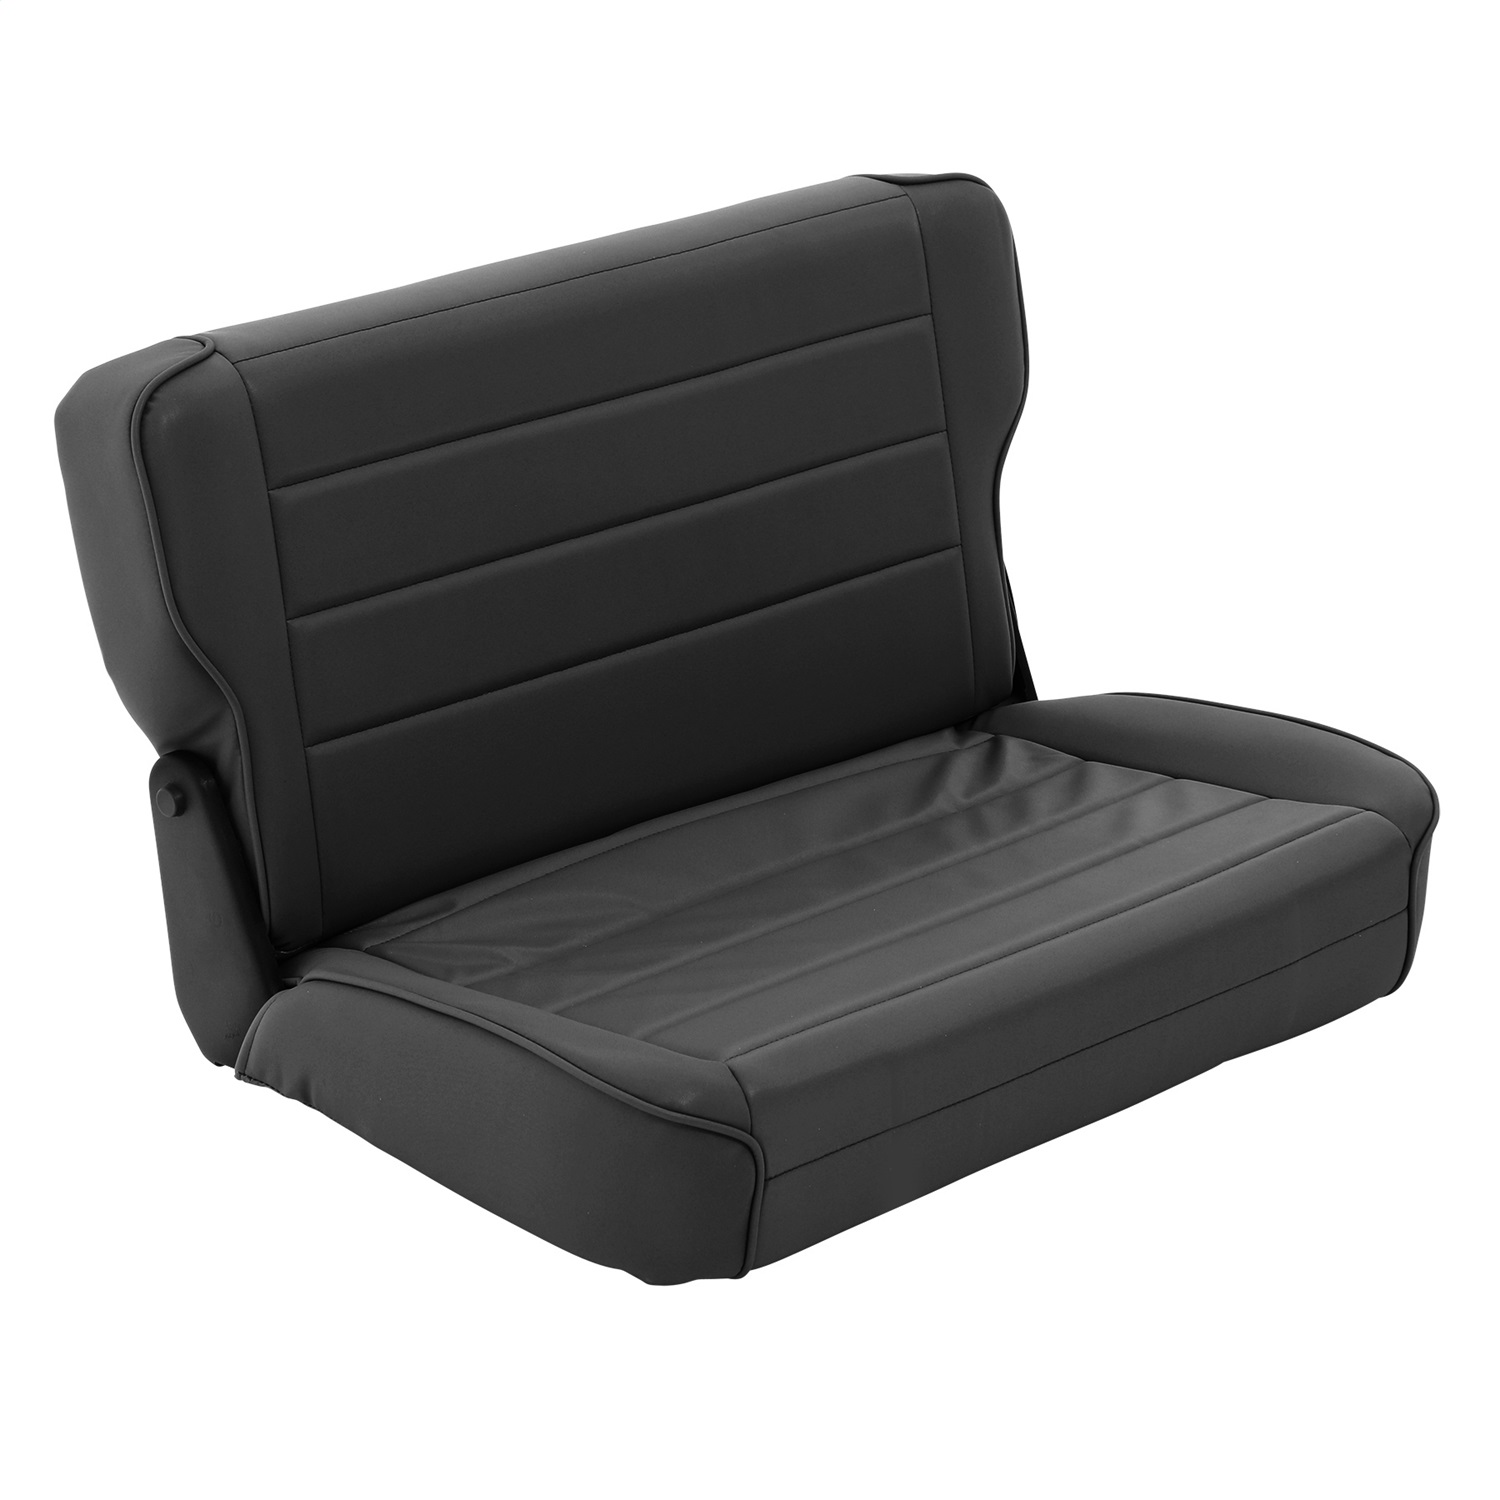 Smittybilt 41315 Fold And Tumble Seat Fits 86-95 CJ7 Wrangler (YJ)